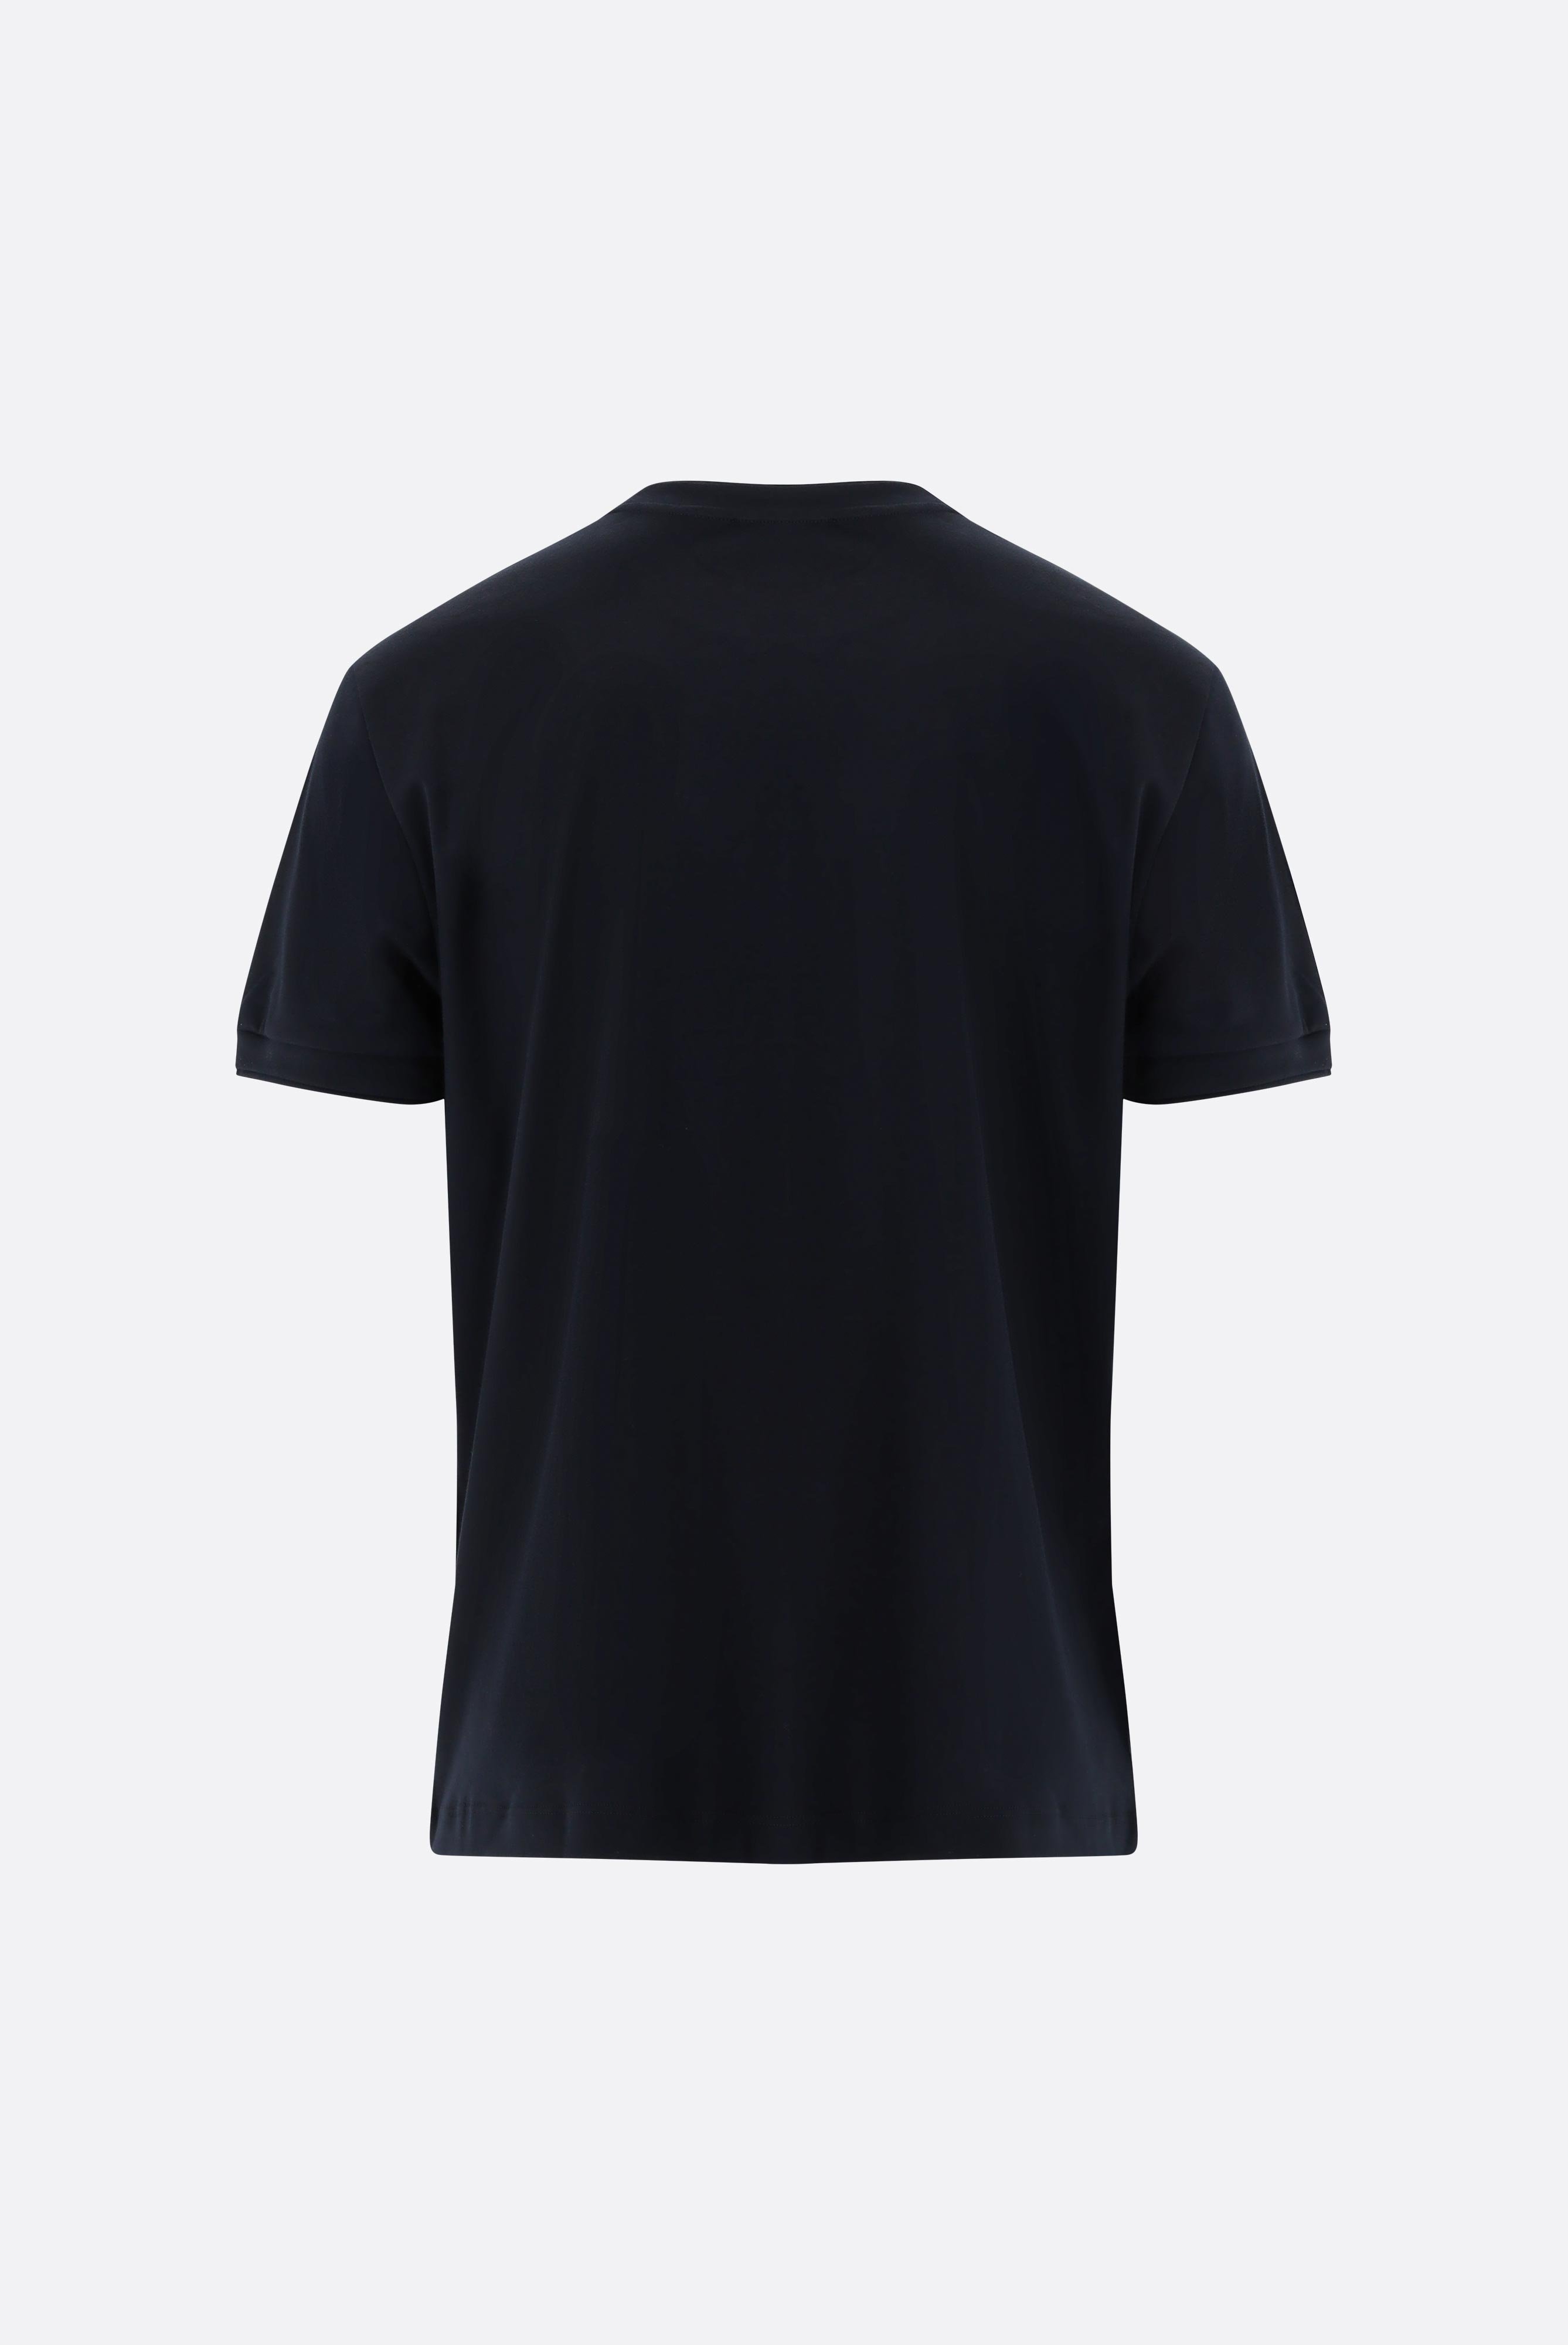 T-Shirts+T-shirt with piping details+20.1673.U2.180053.790.XS